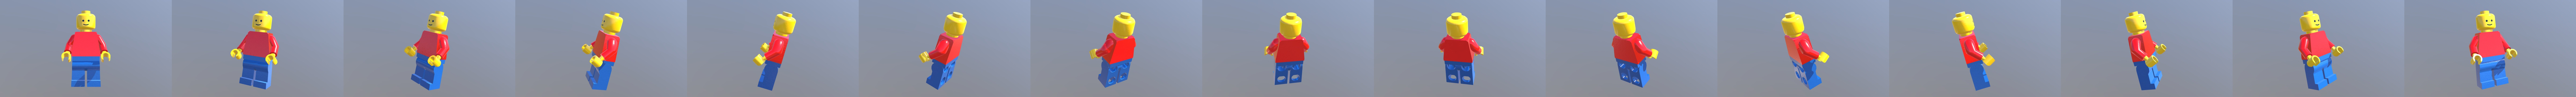 Lego Minifigure - PBR - 3D model by TheThomasTrainzUser